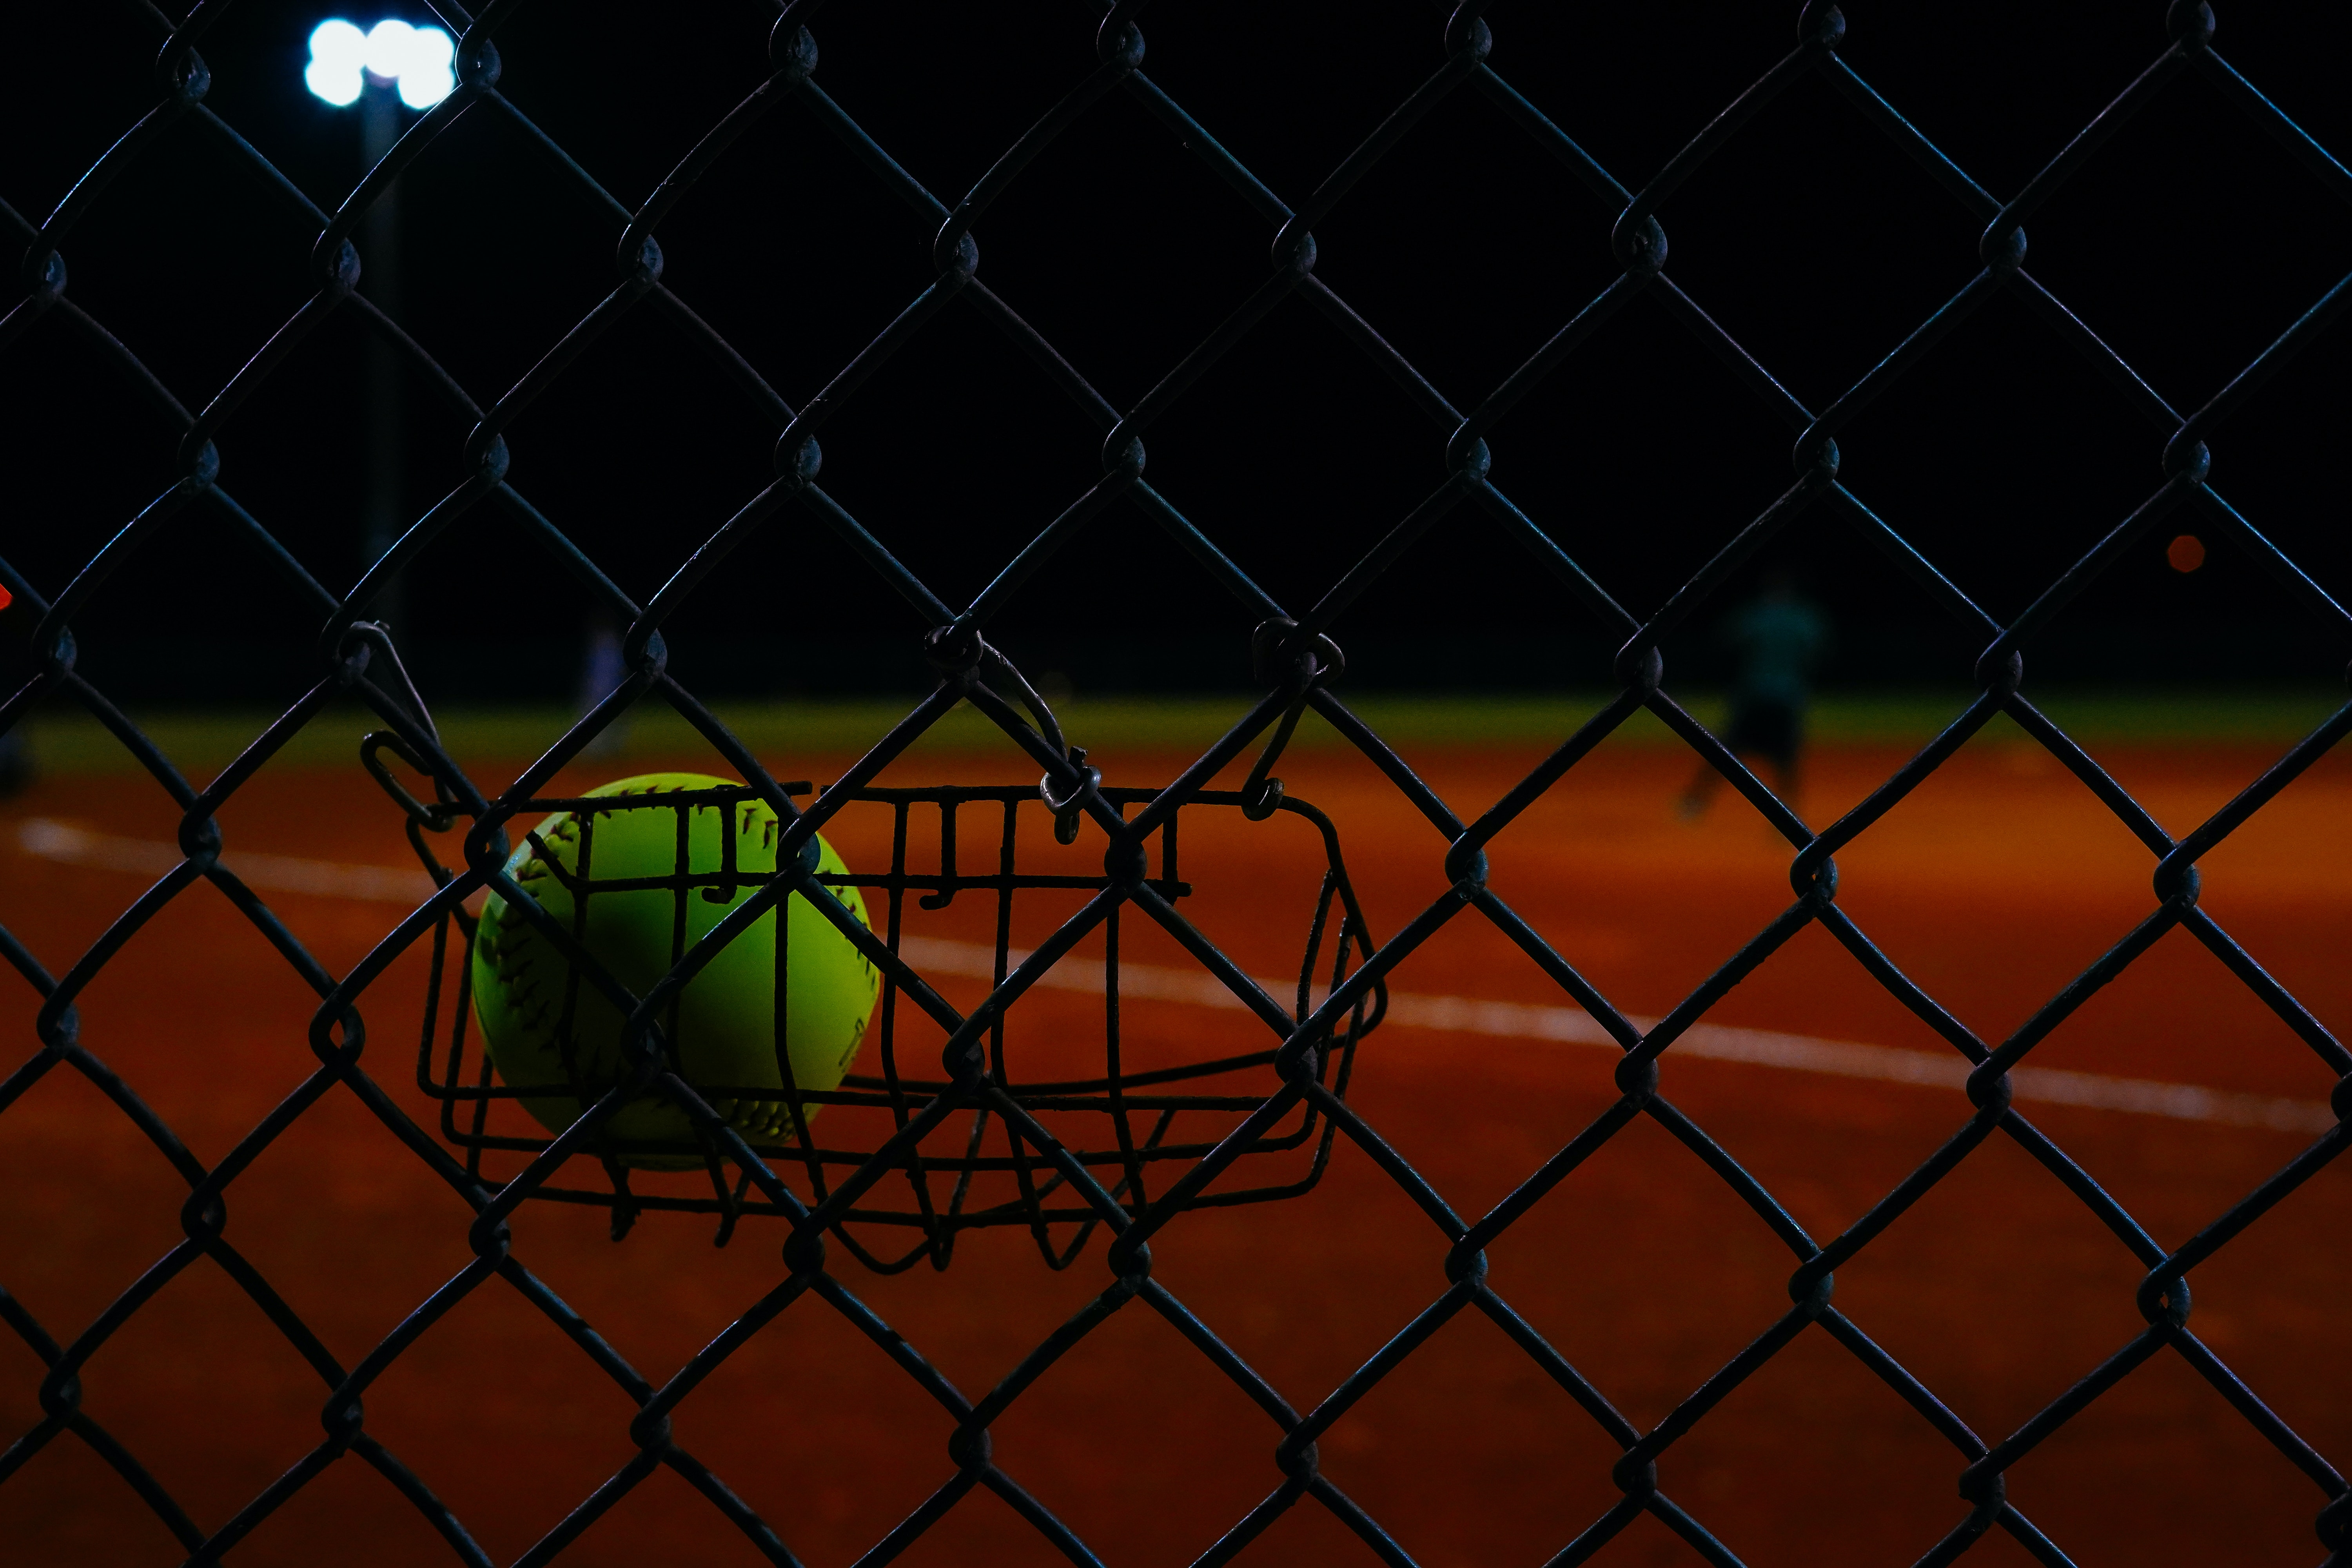 Fence with softball